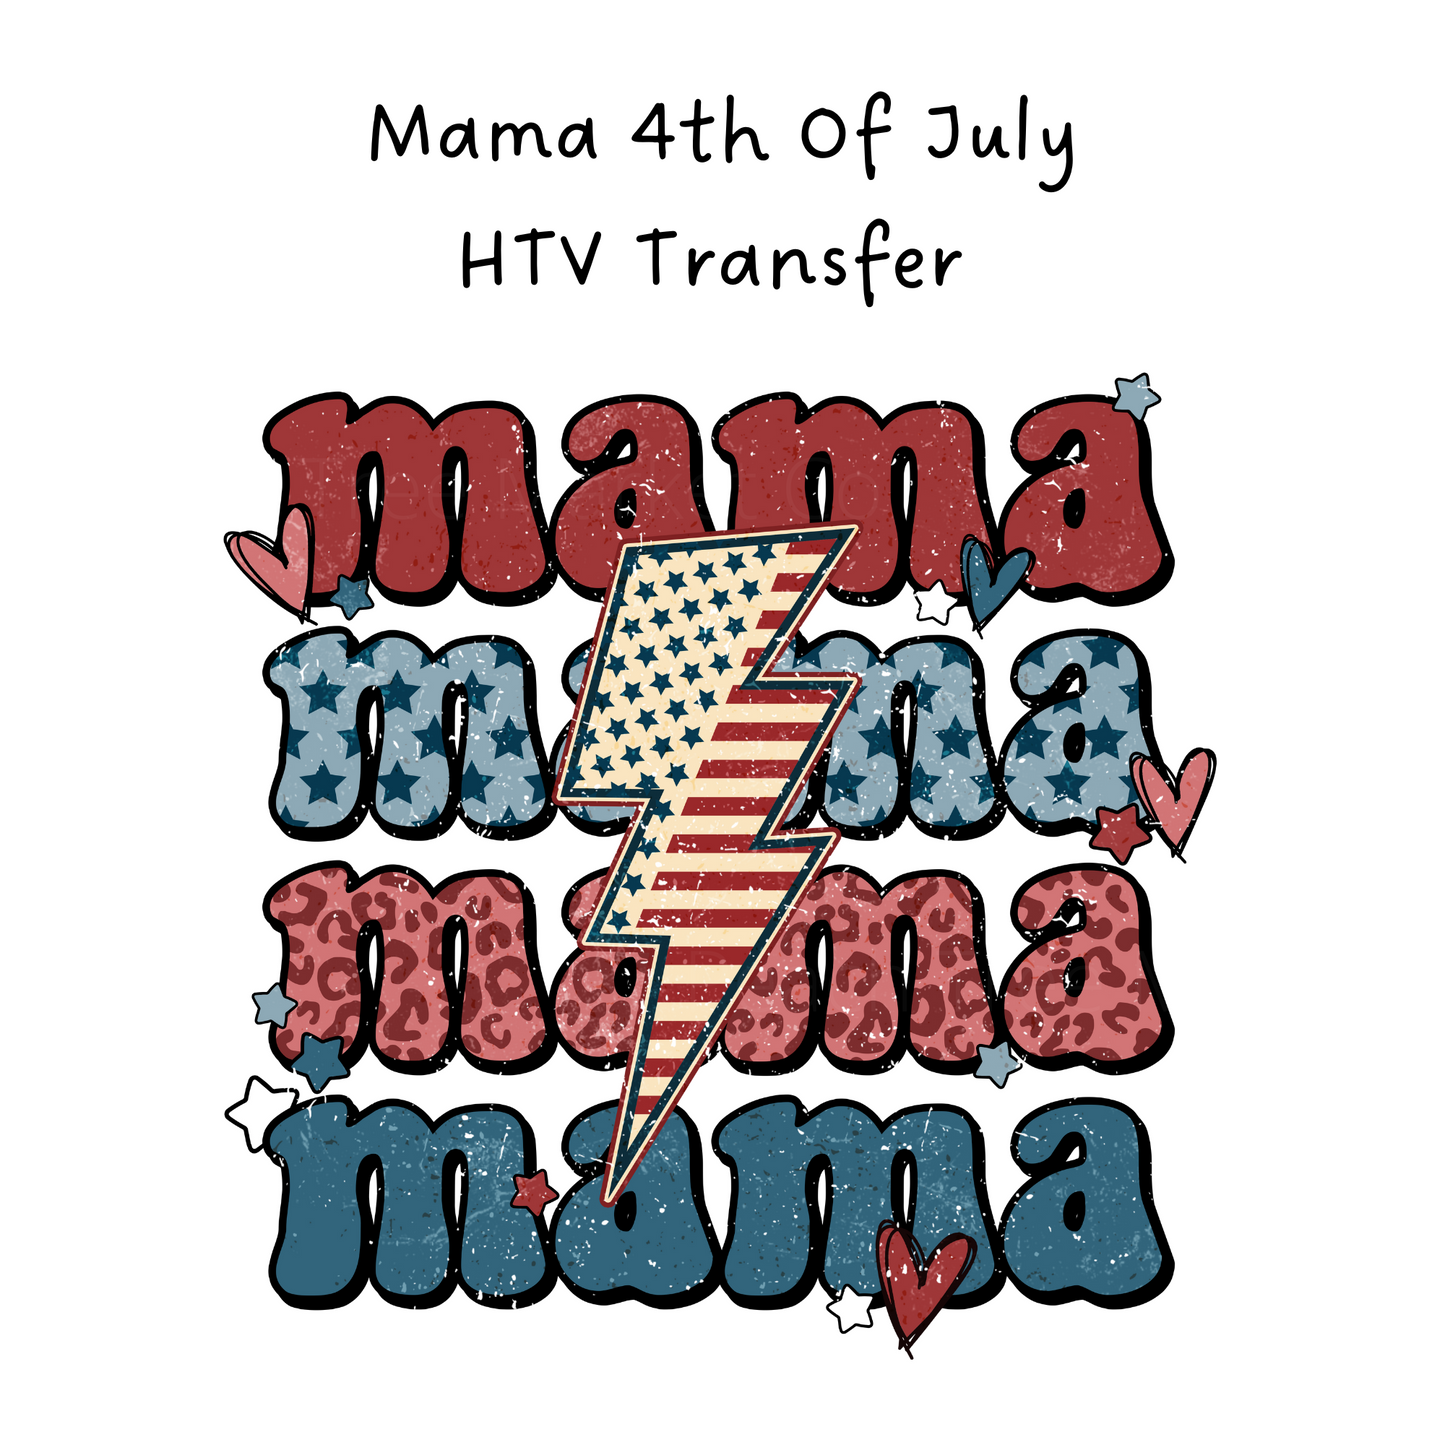 Mama 4th Of July HTV Transfer